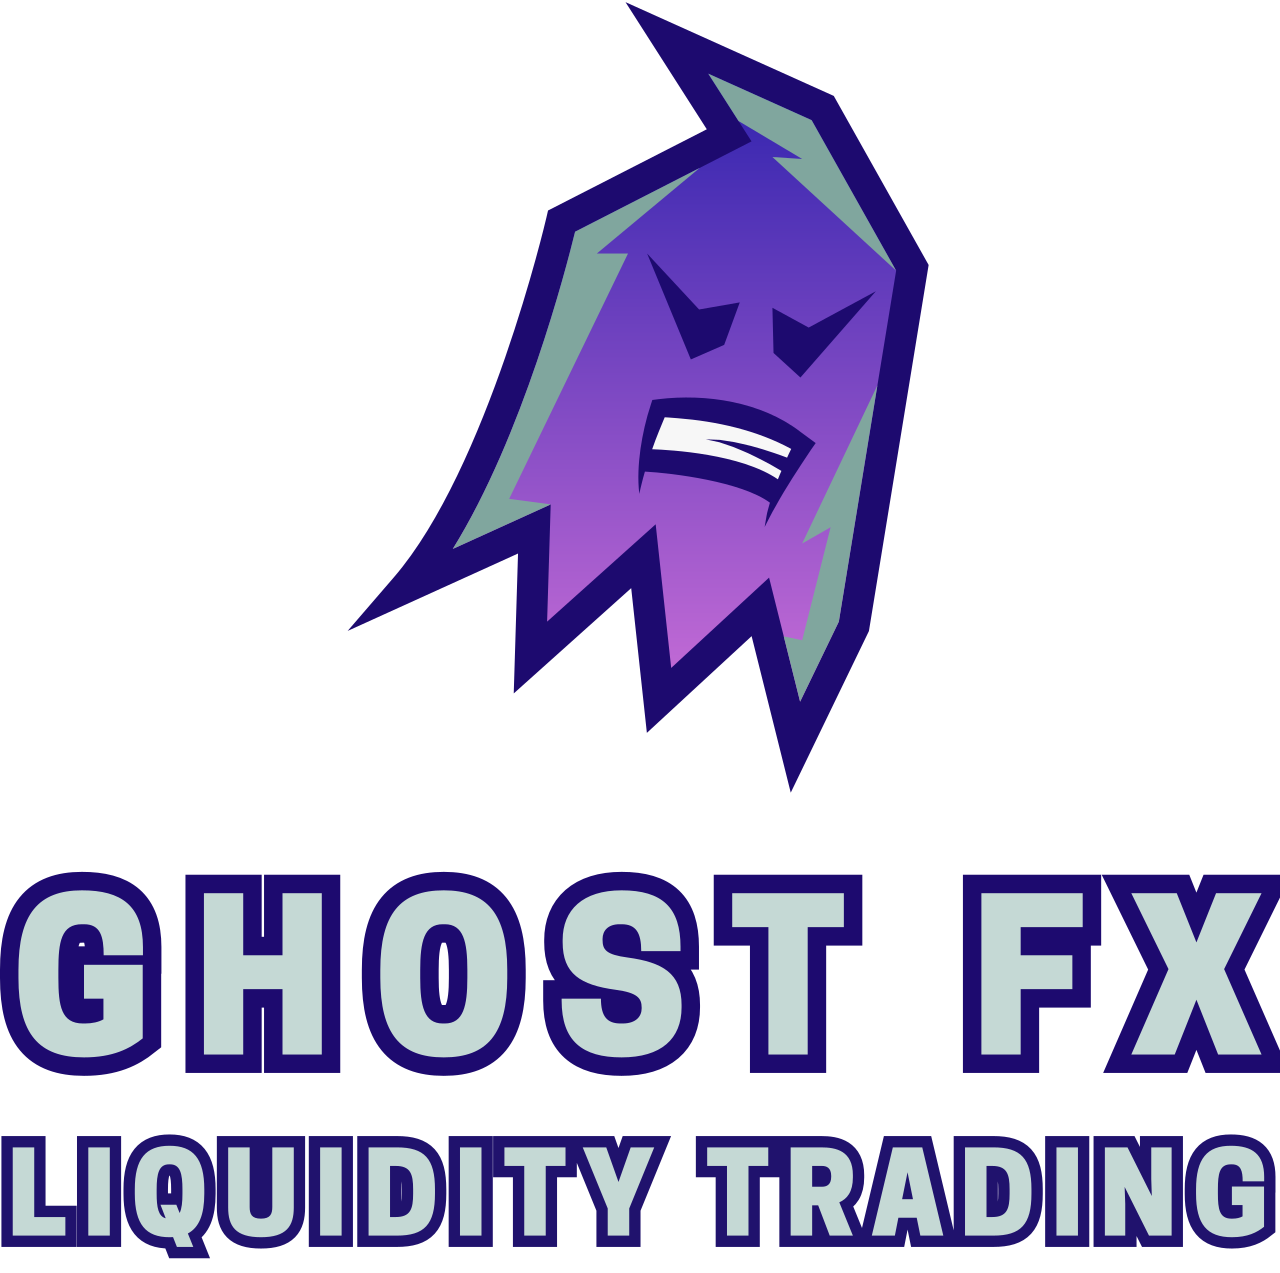 GHOST FX's logo